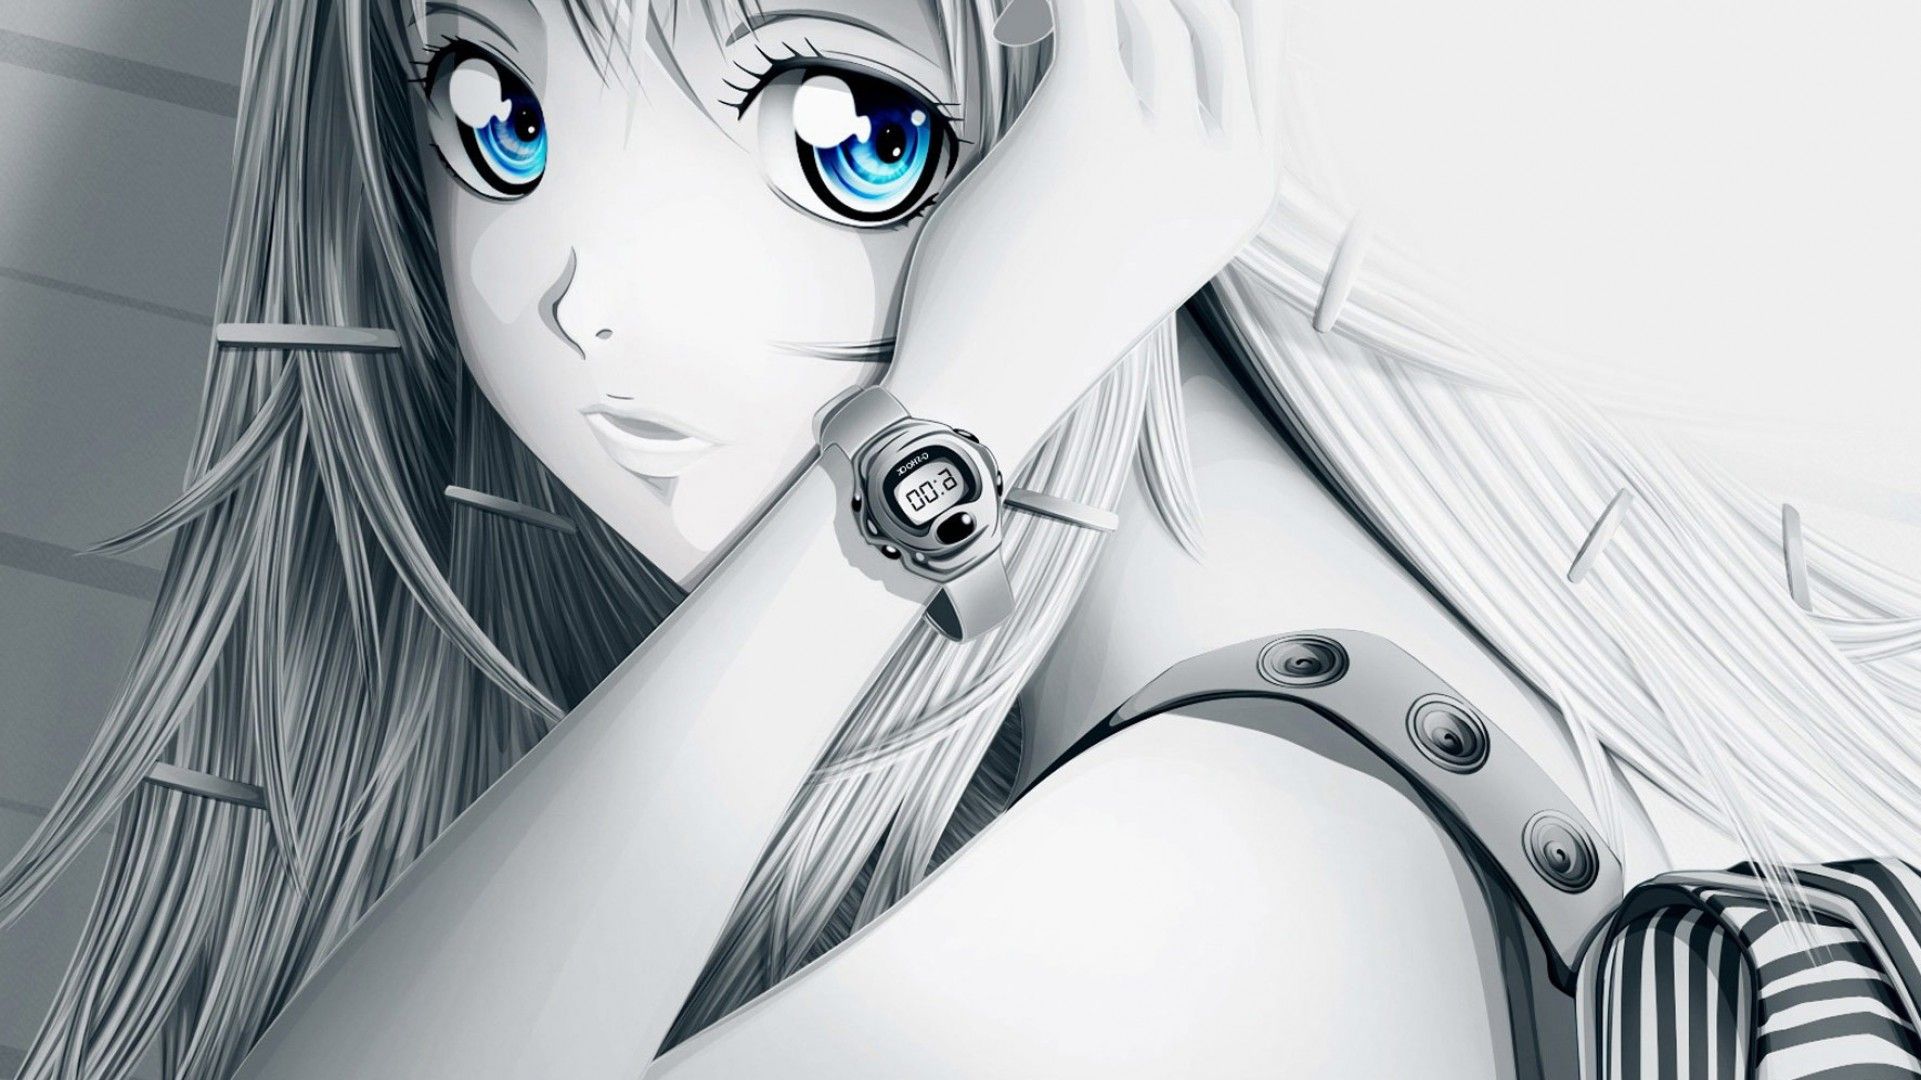 Cute Anime Girl Desktop Wallpaper Dreamlovebackgrounds